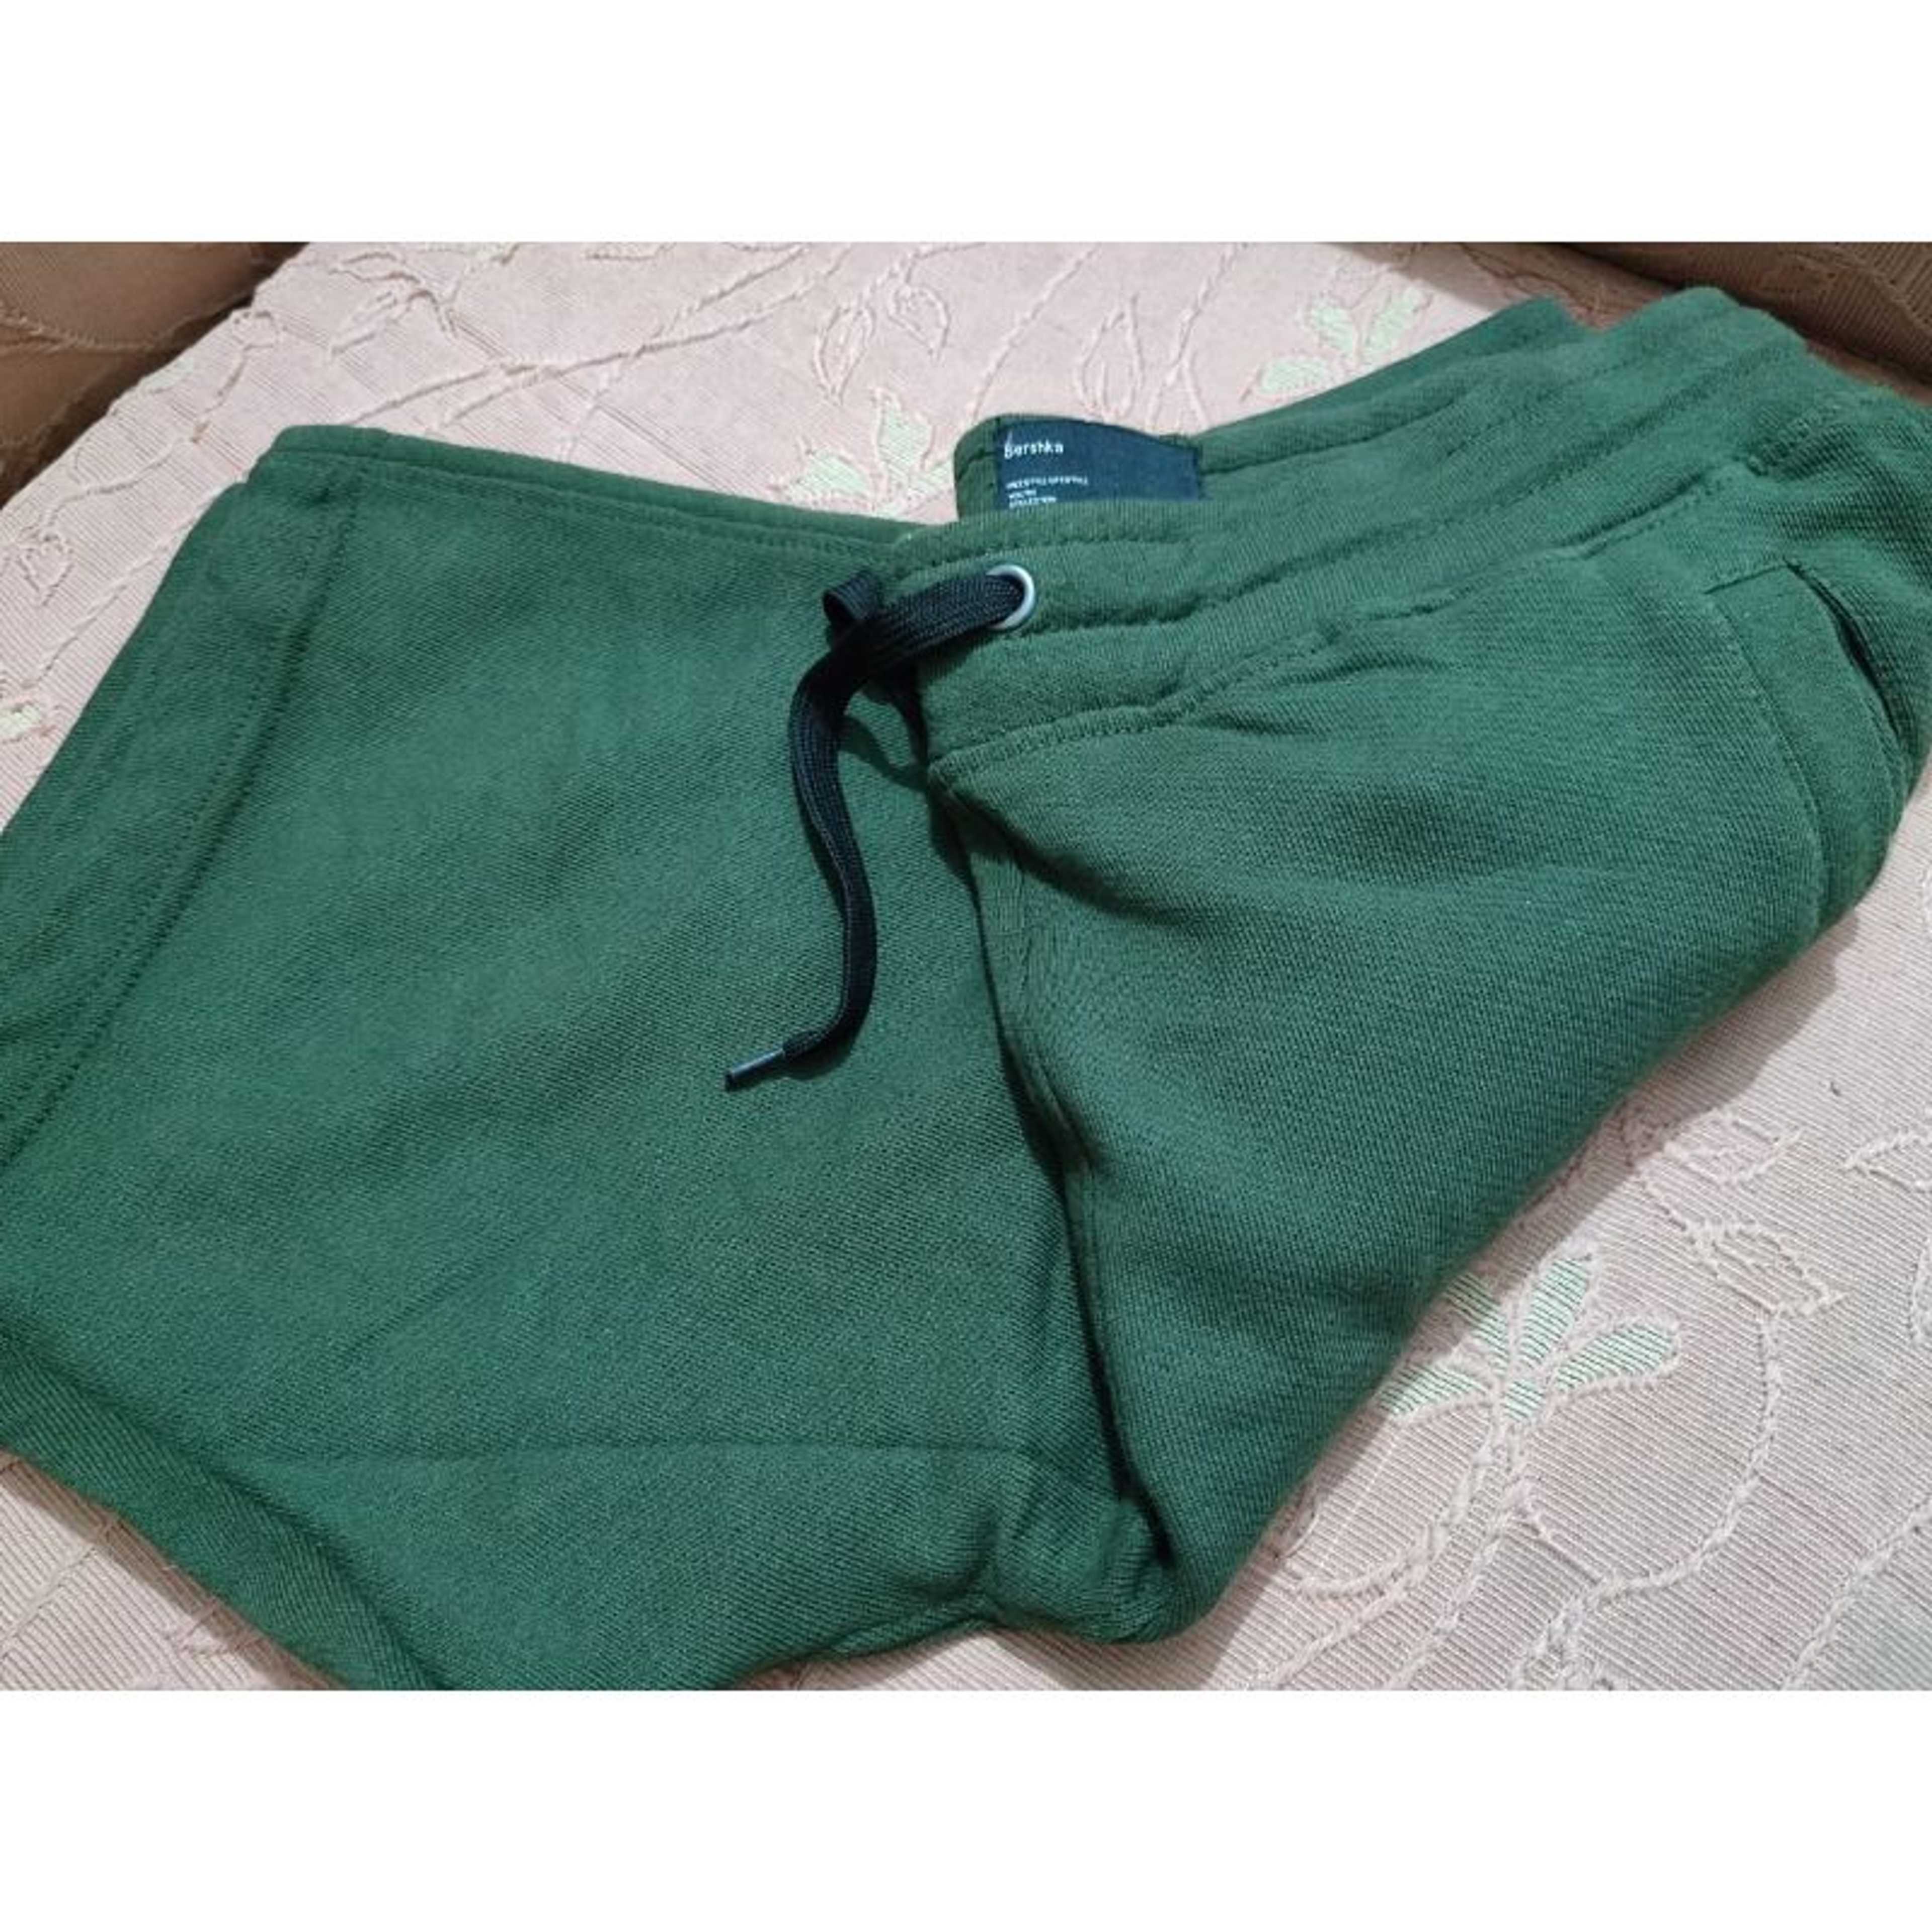 Branded Leftover Shorts in Green Color